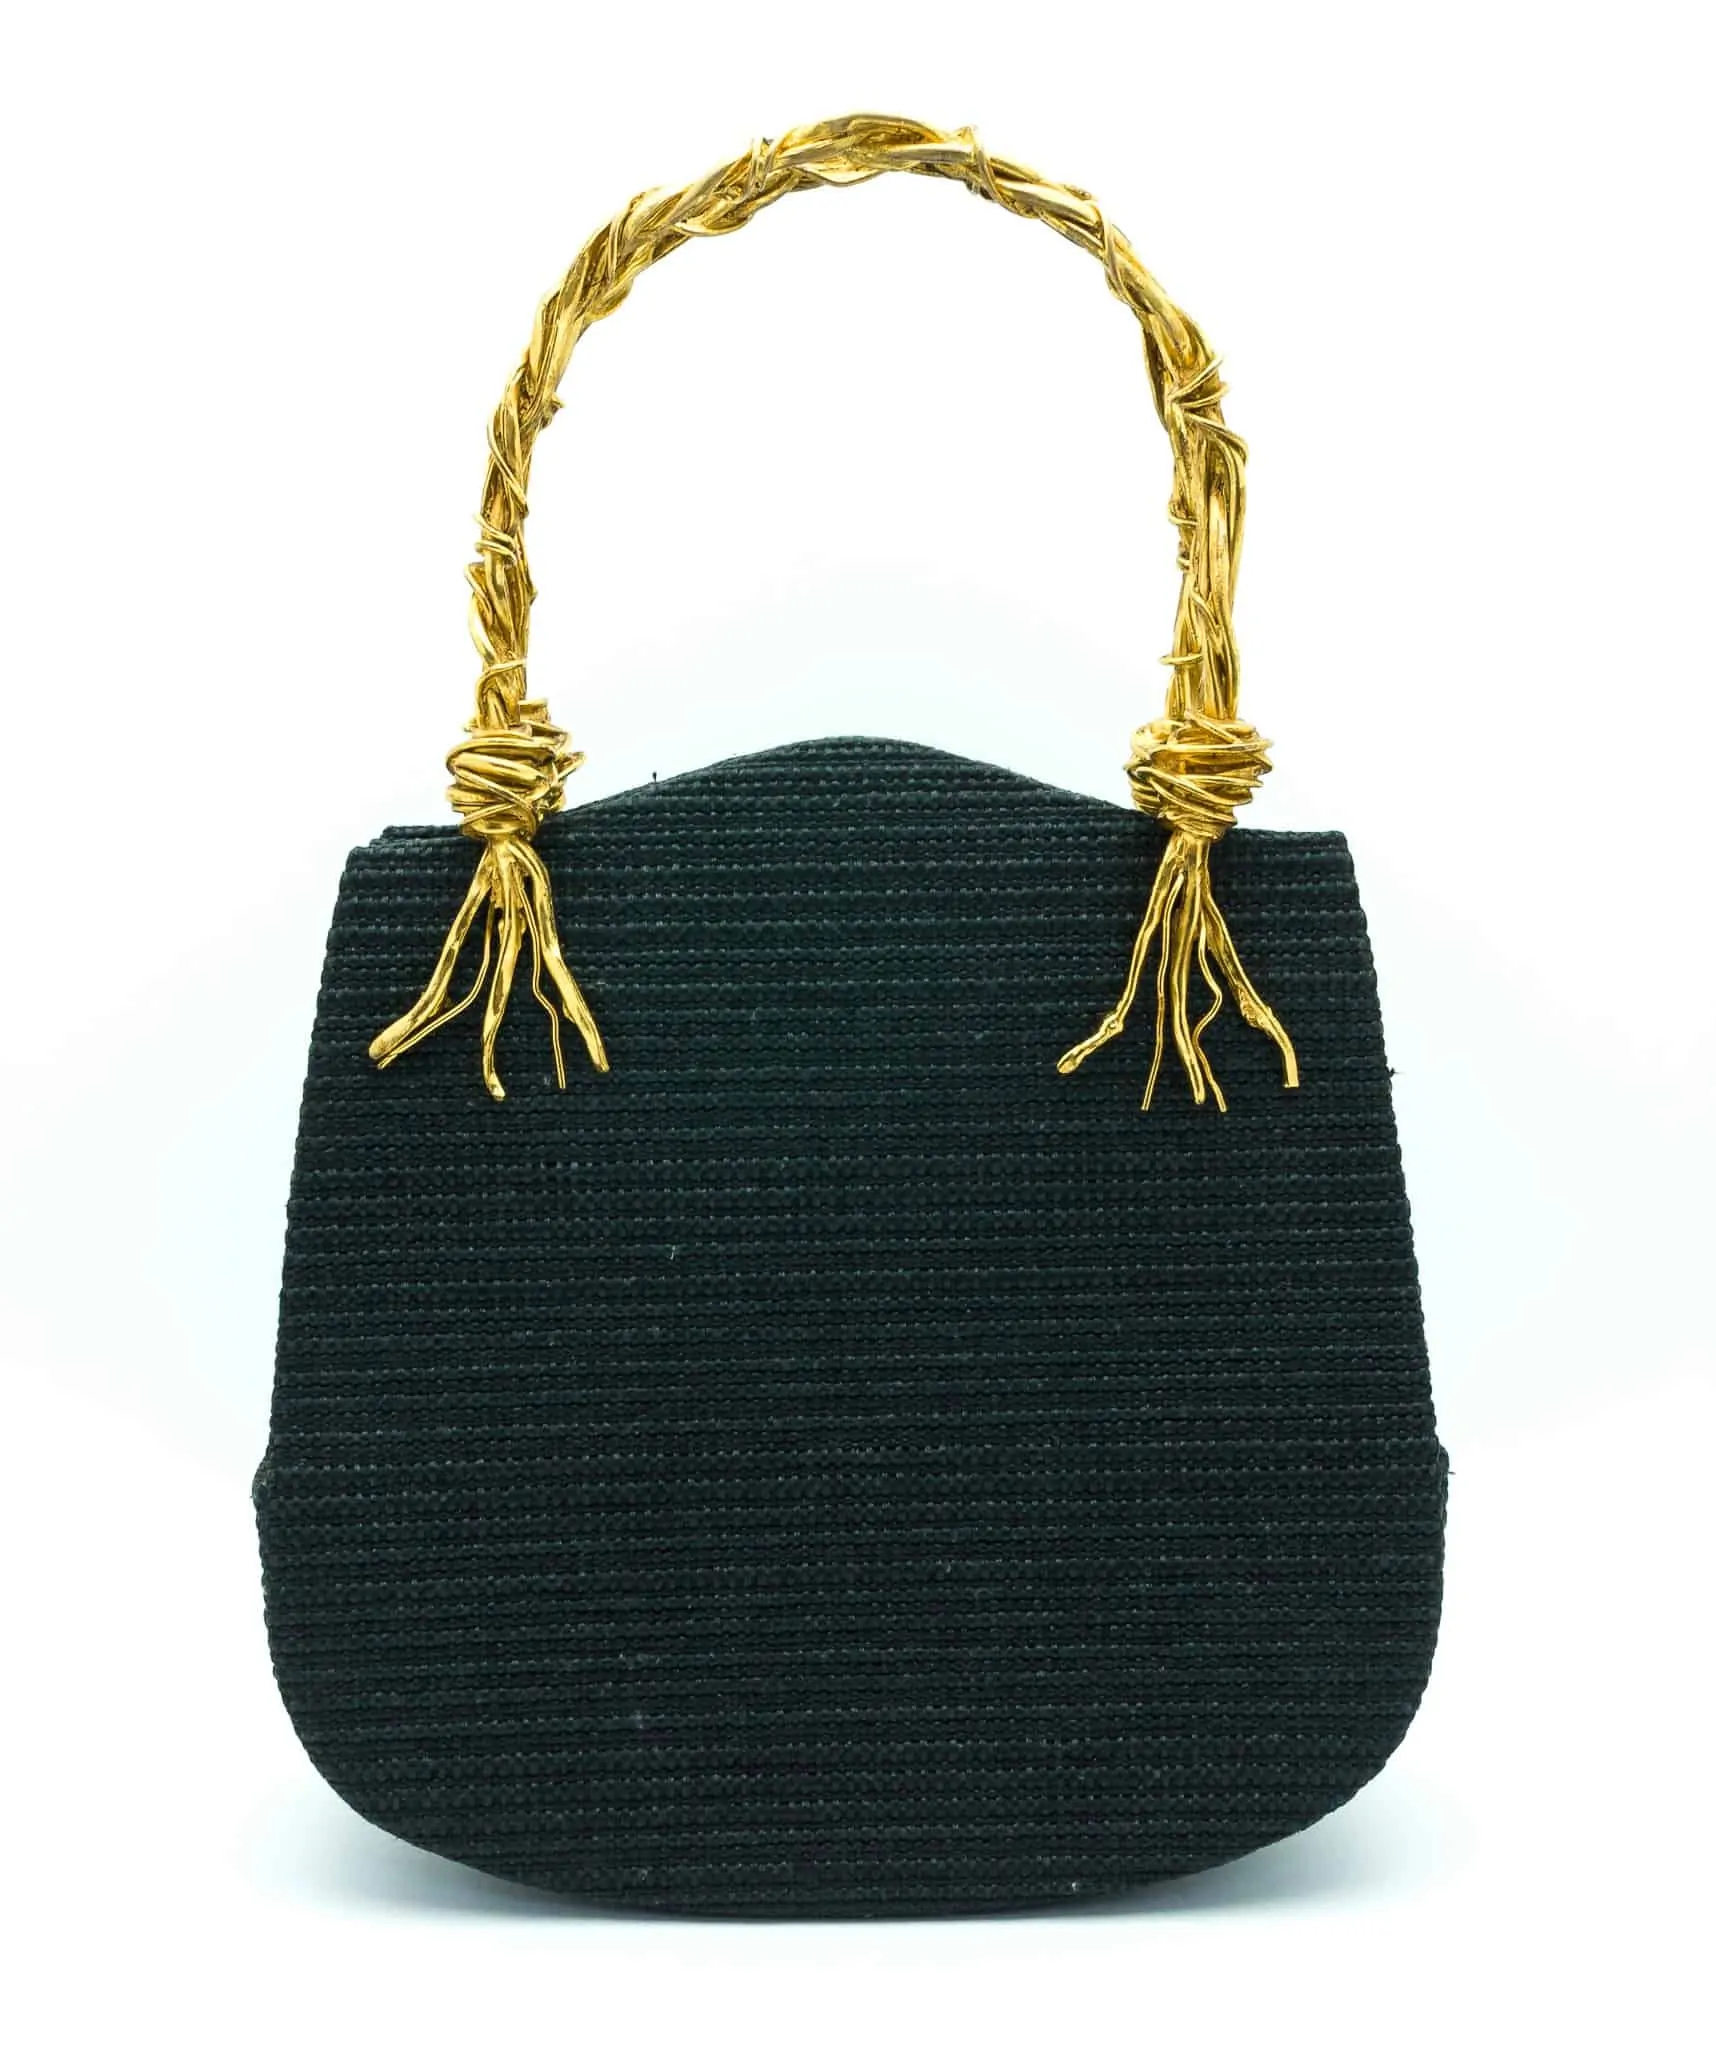 Christian Lacroix Crossbody Cream Handbag Purse | eBay